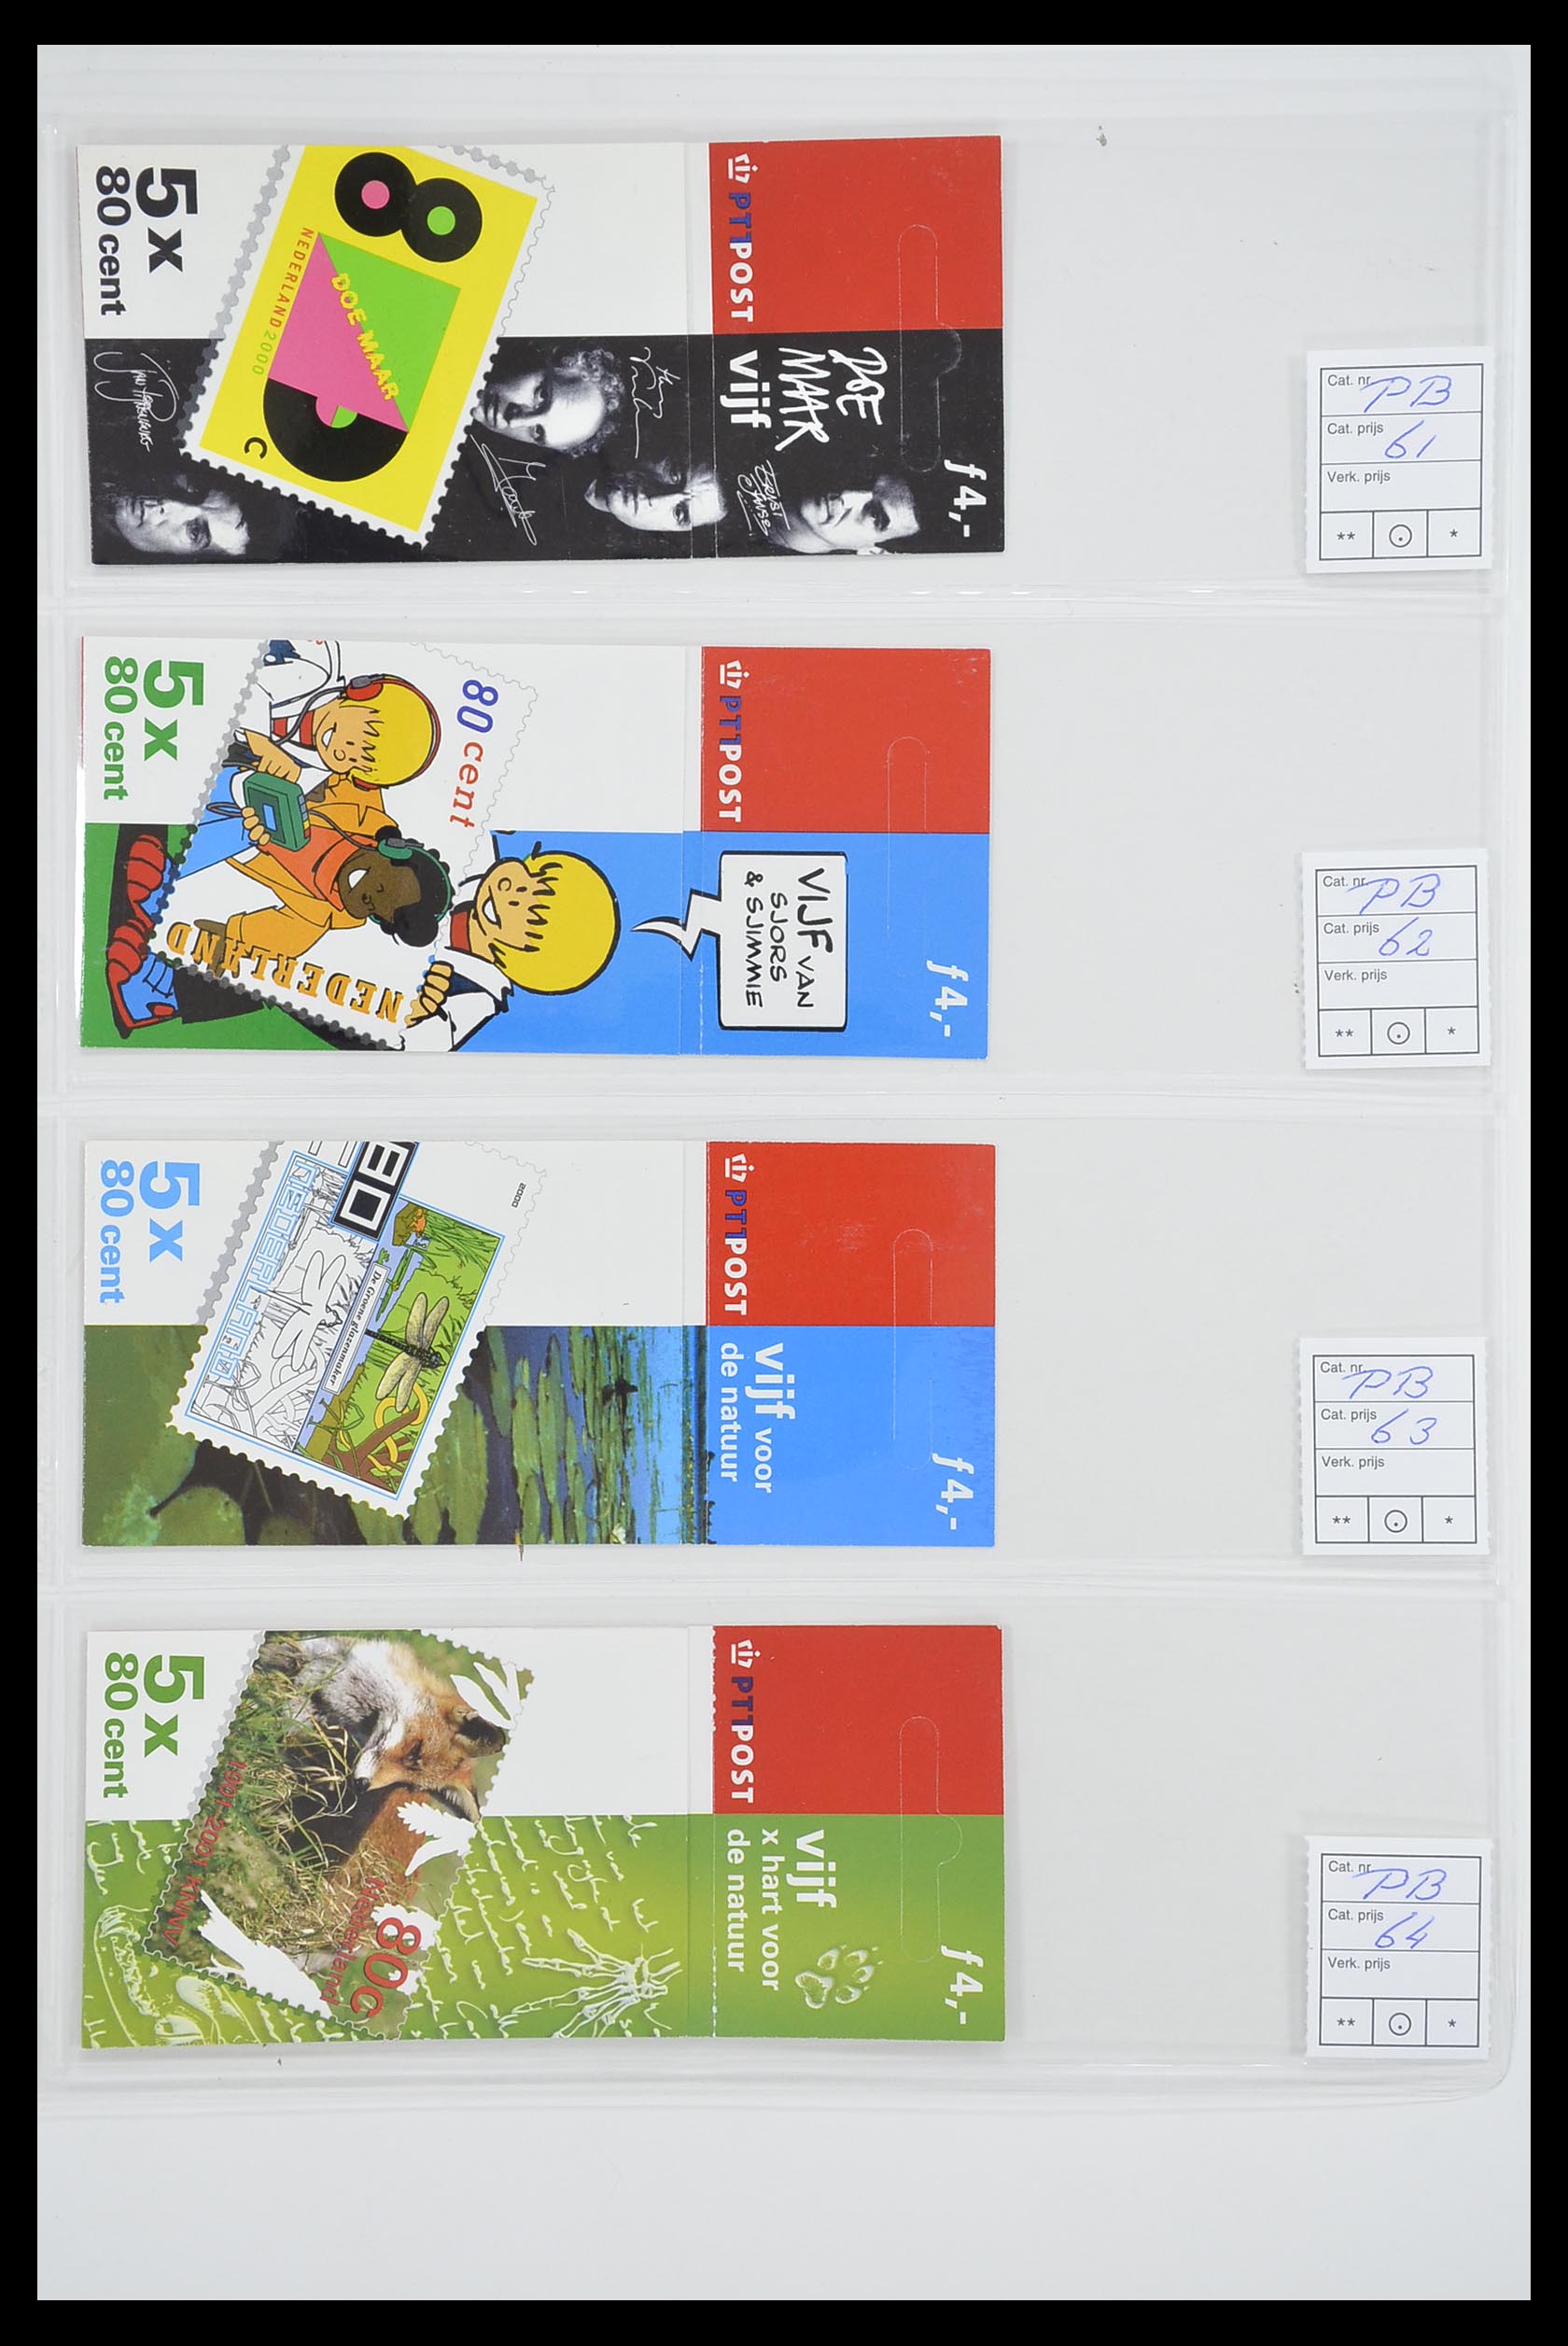 33815 076 - Stamp collection 33815 Netherlands stamp booklets 1964-2001.